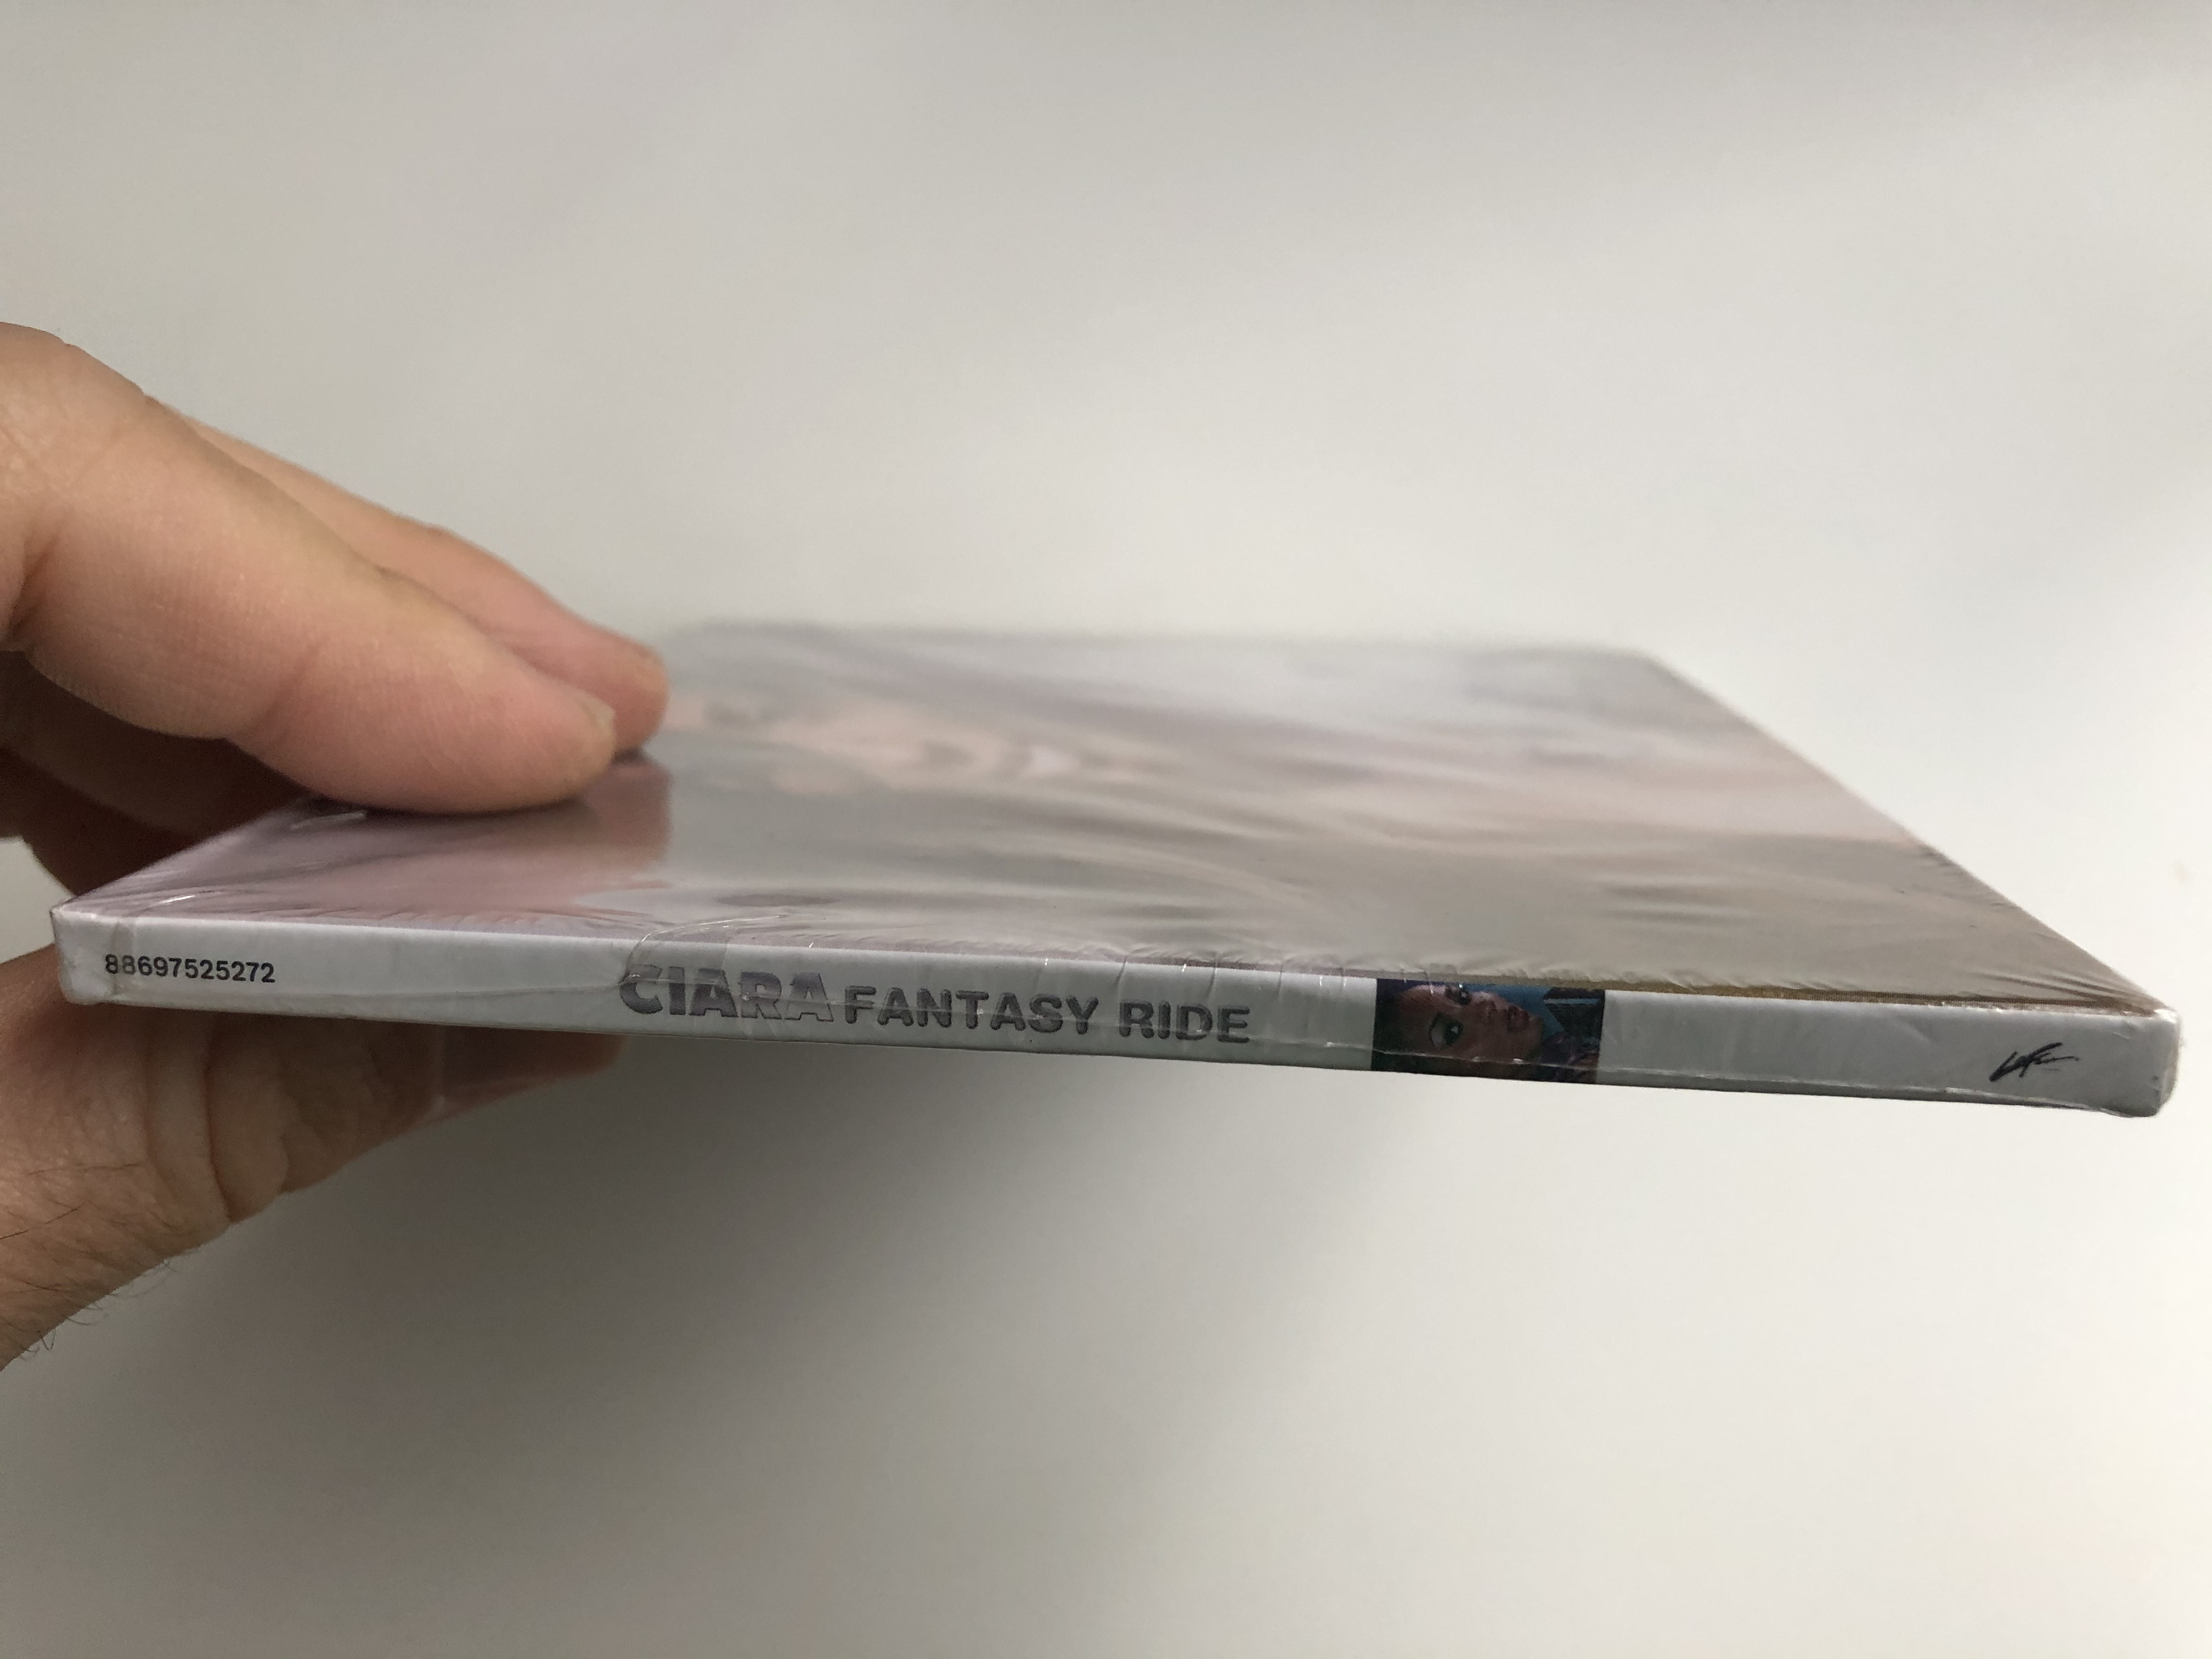 ciara-fantasy-ride-sony-music-audio-cd-2009-88697525272-3-.jpg